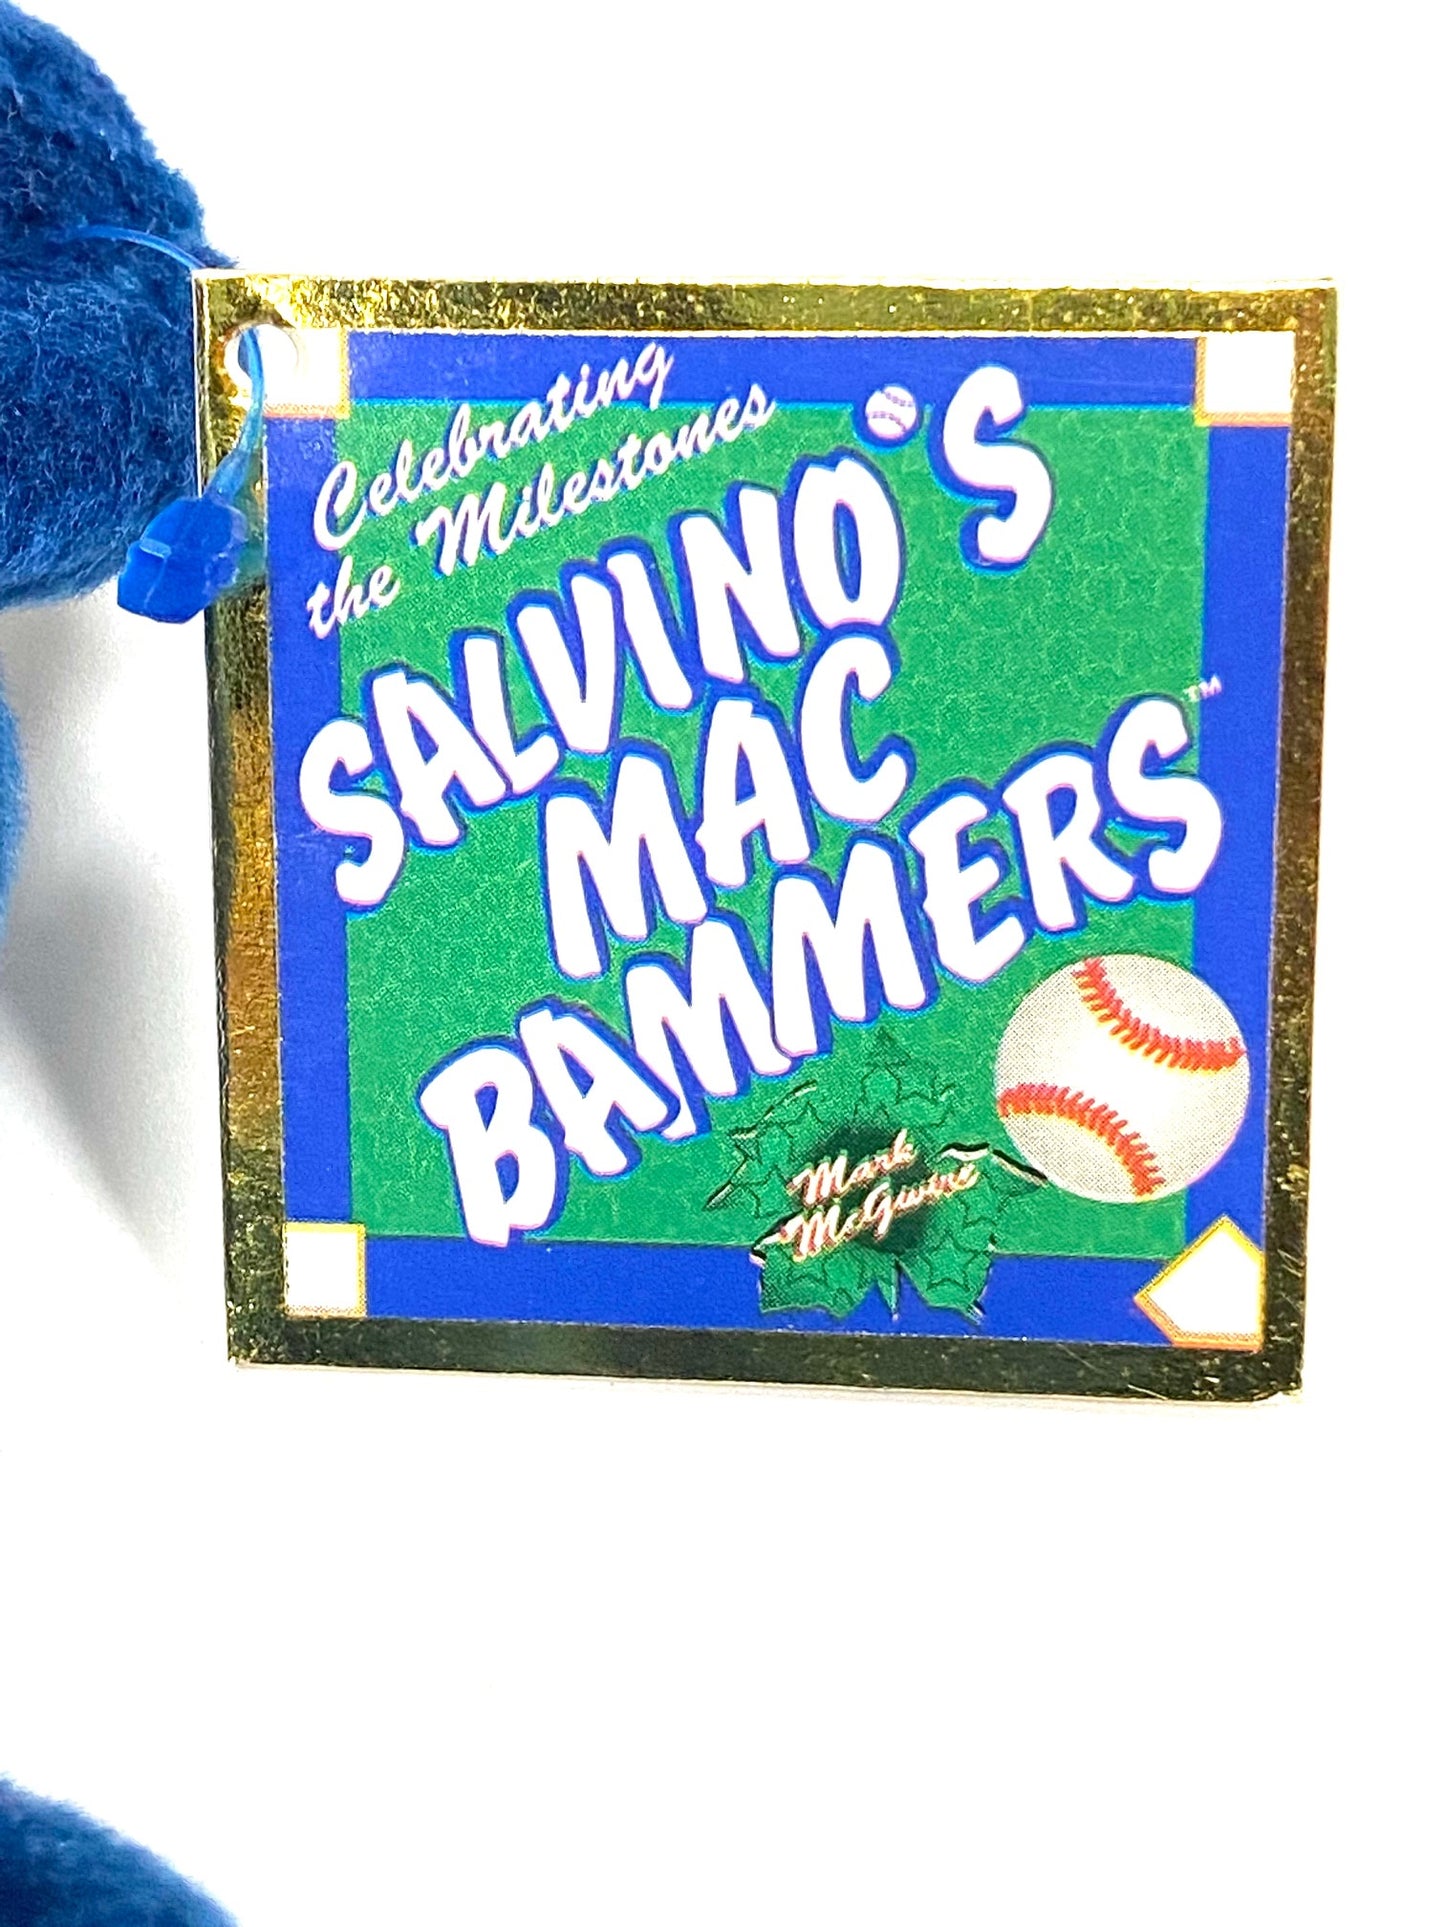 Mark McGwire 500 Homers 8-5-99 Mac Bomber (New) by Salvino's